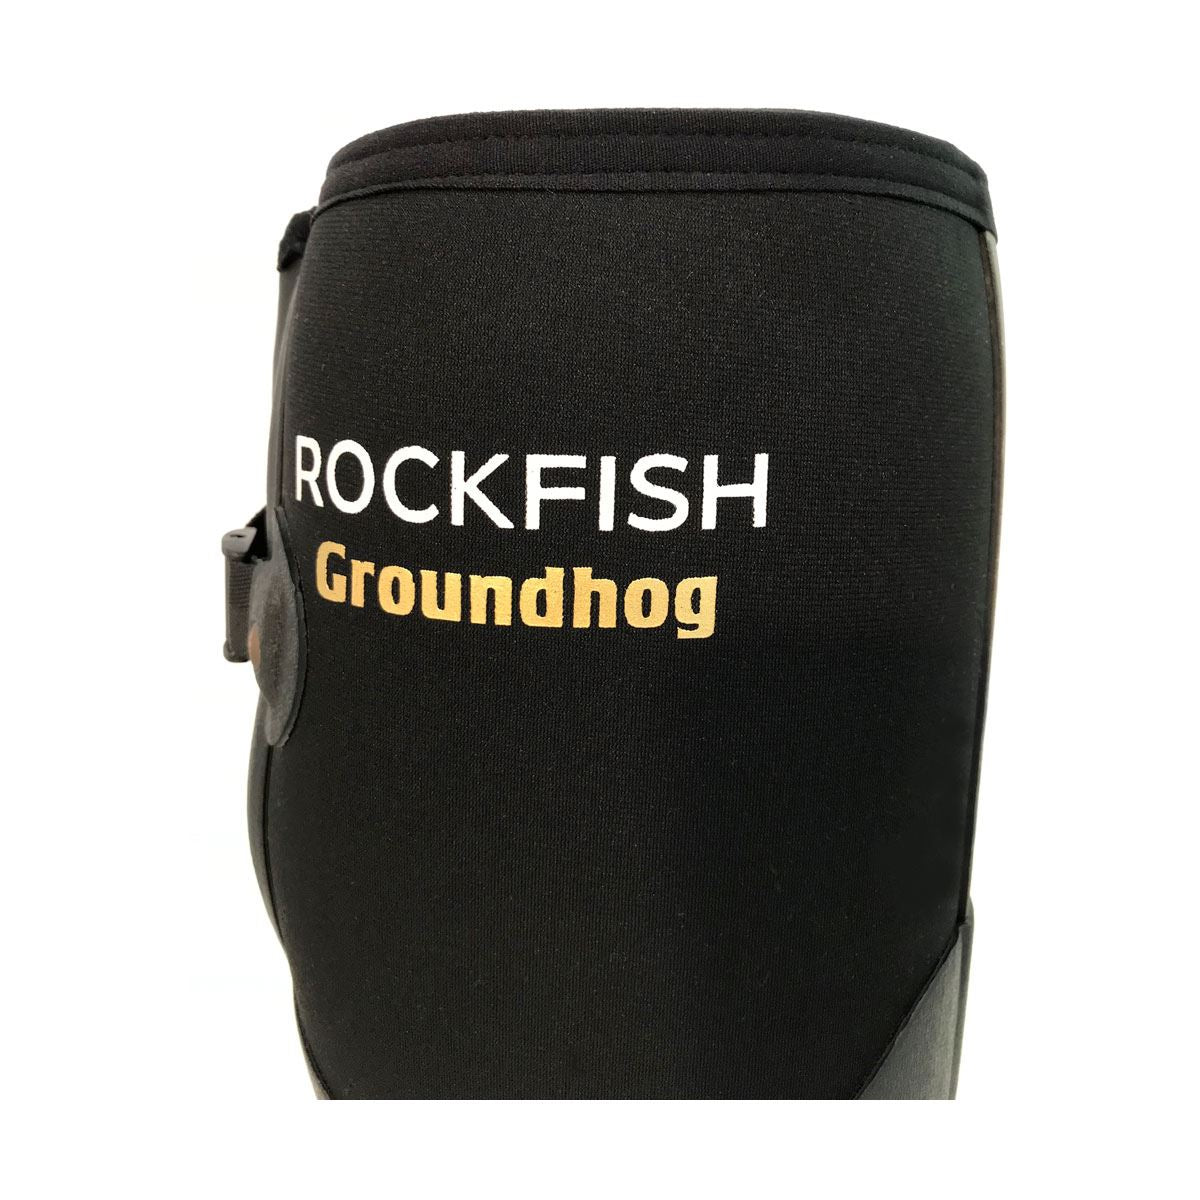 Rockfish Neoprene Lined Groundhog Wellington Boots - Just Horse Riders